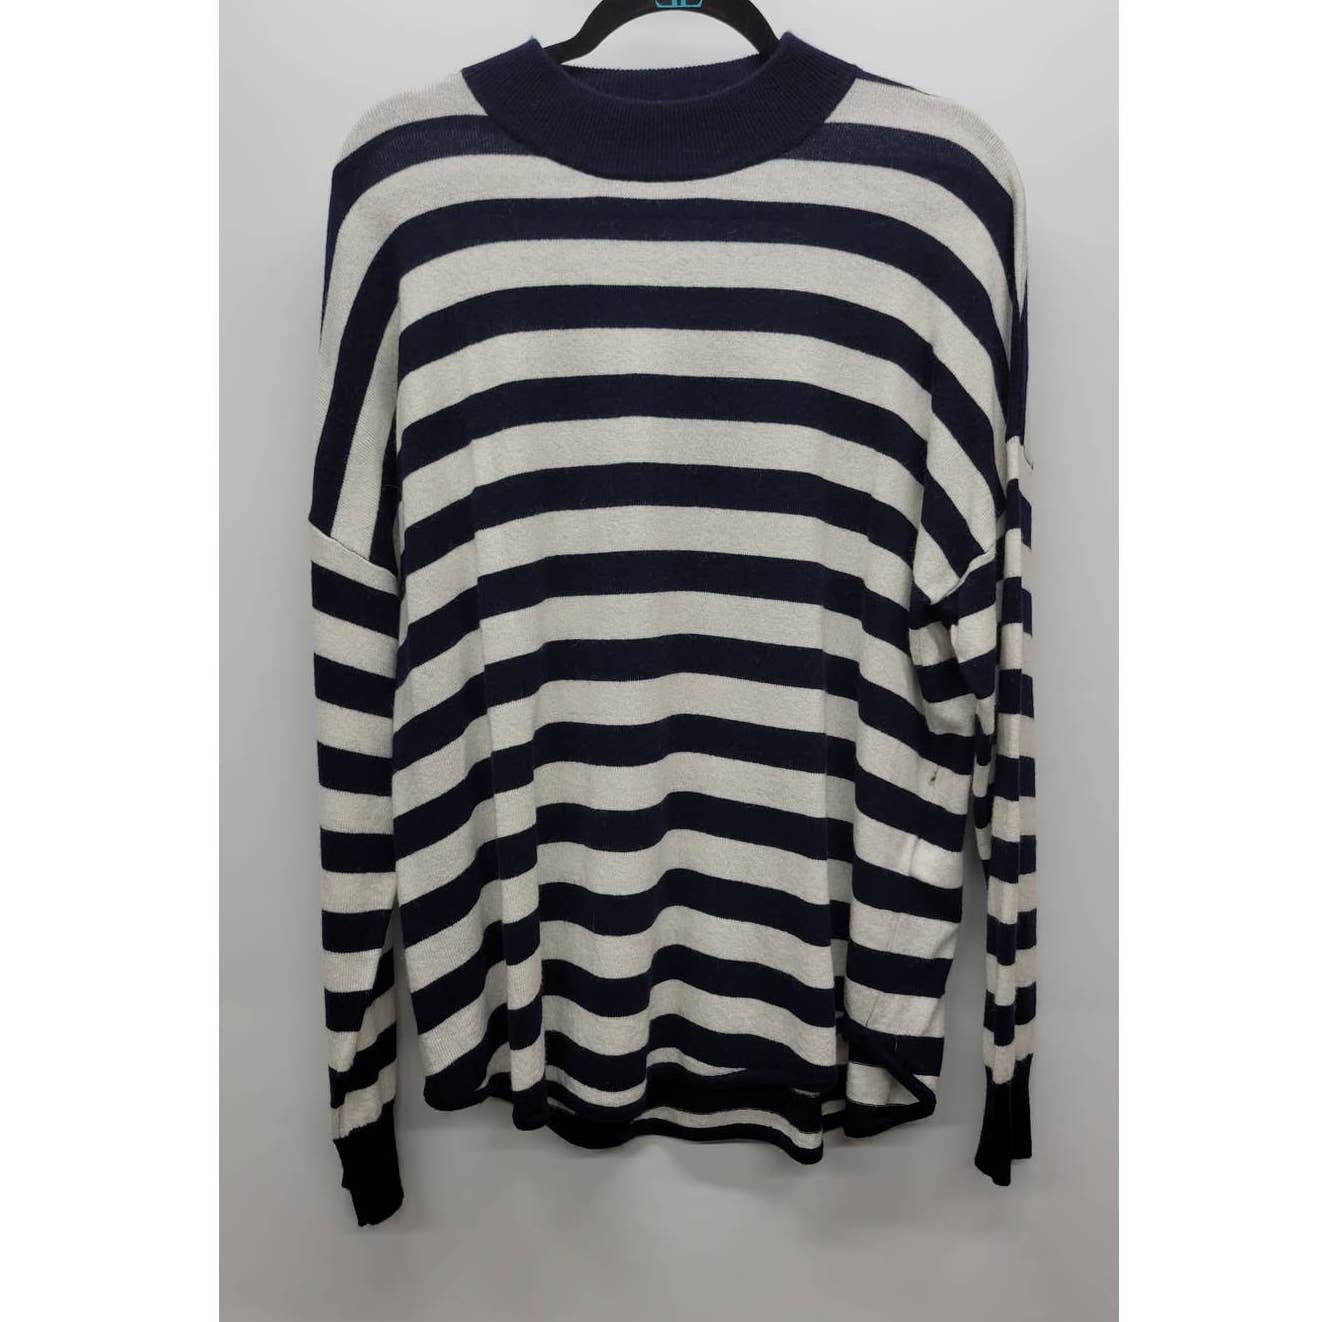 Comfortable Madewell Ashbury Mockneck Sweater Kelsey Stripe i6PTTJsGt Low Price